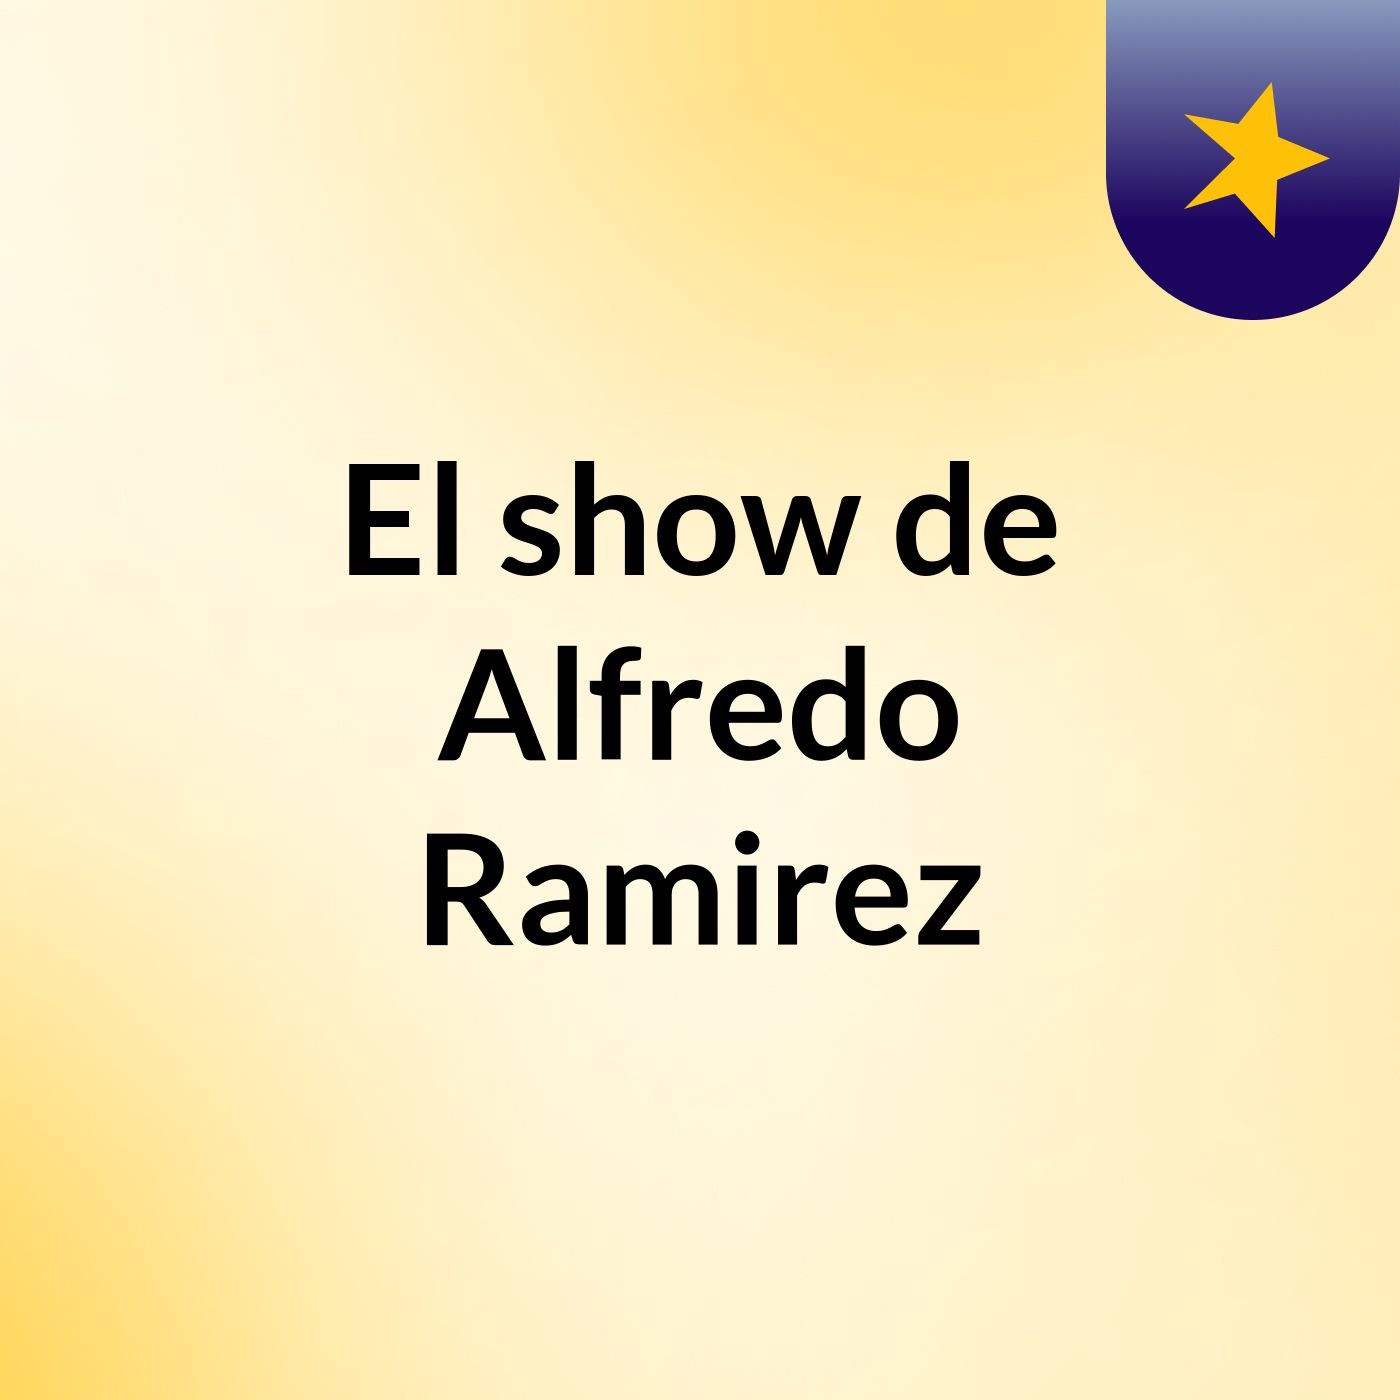 El show de Alfredo Ramirez